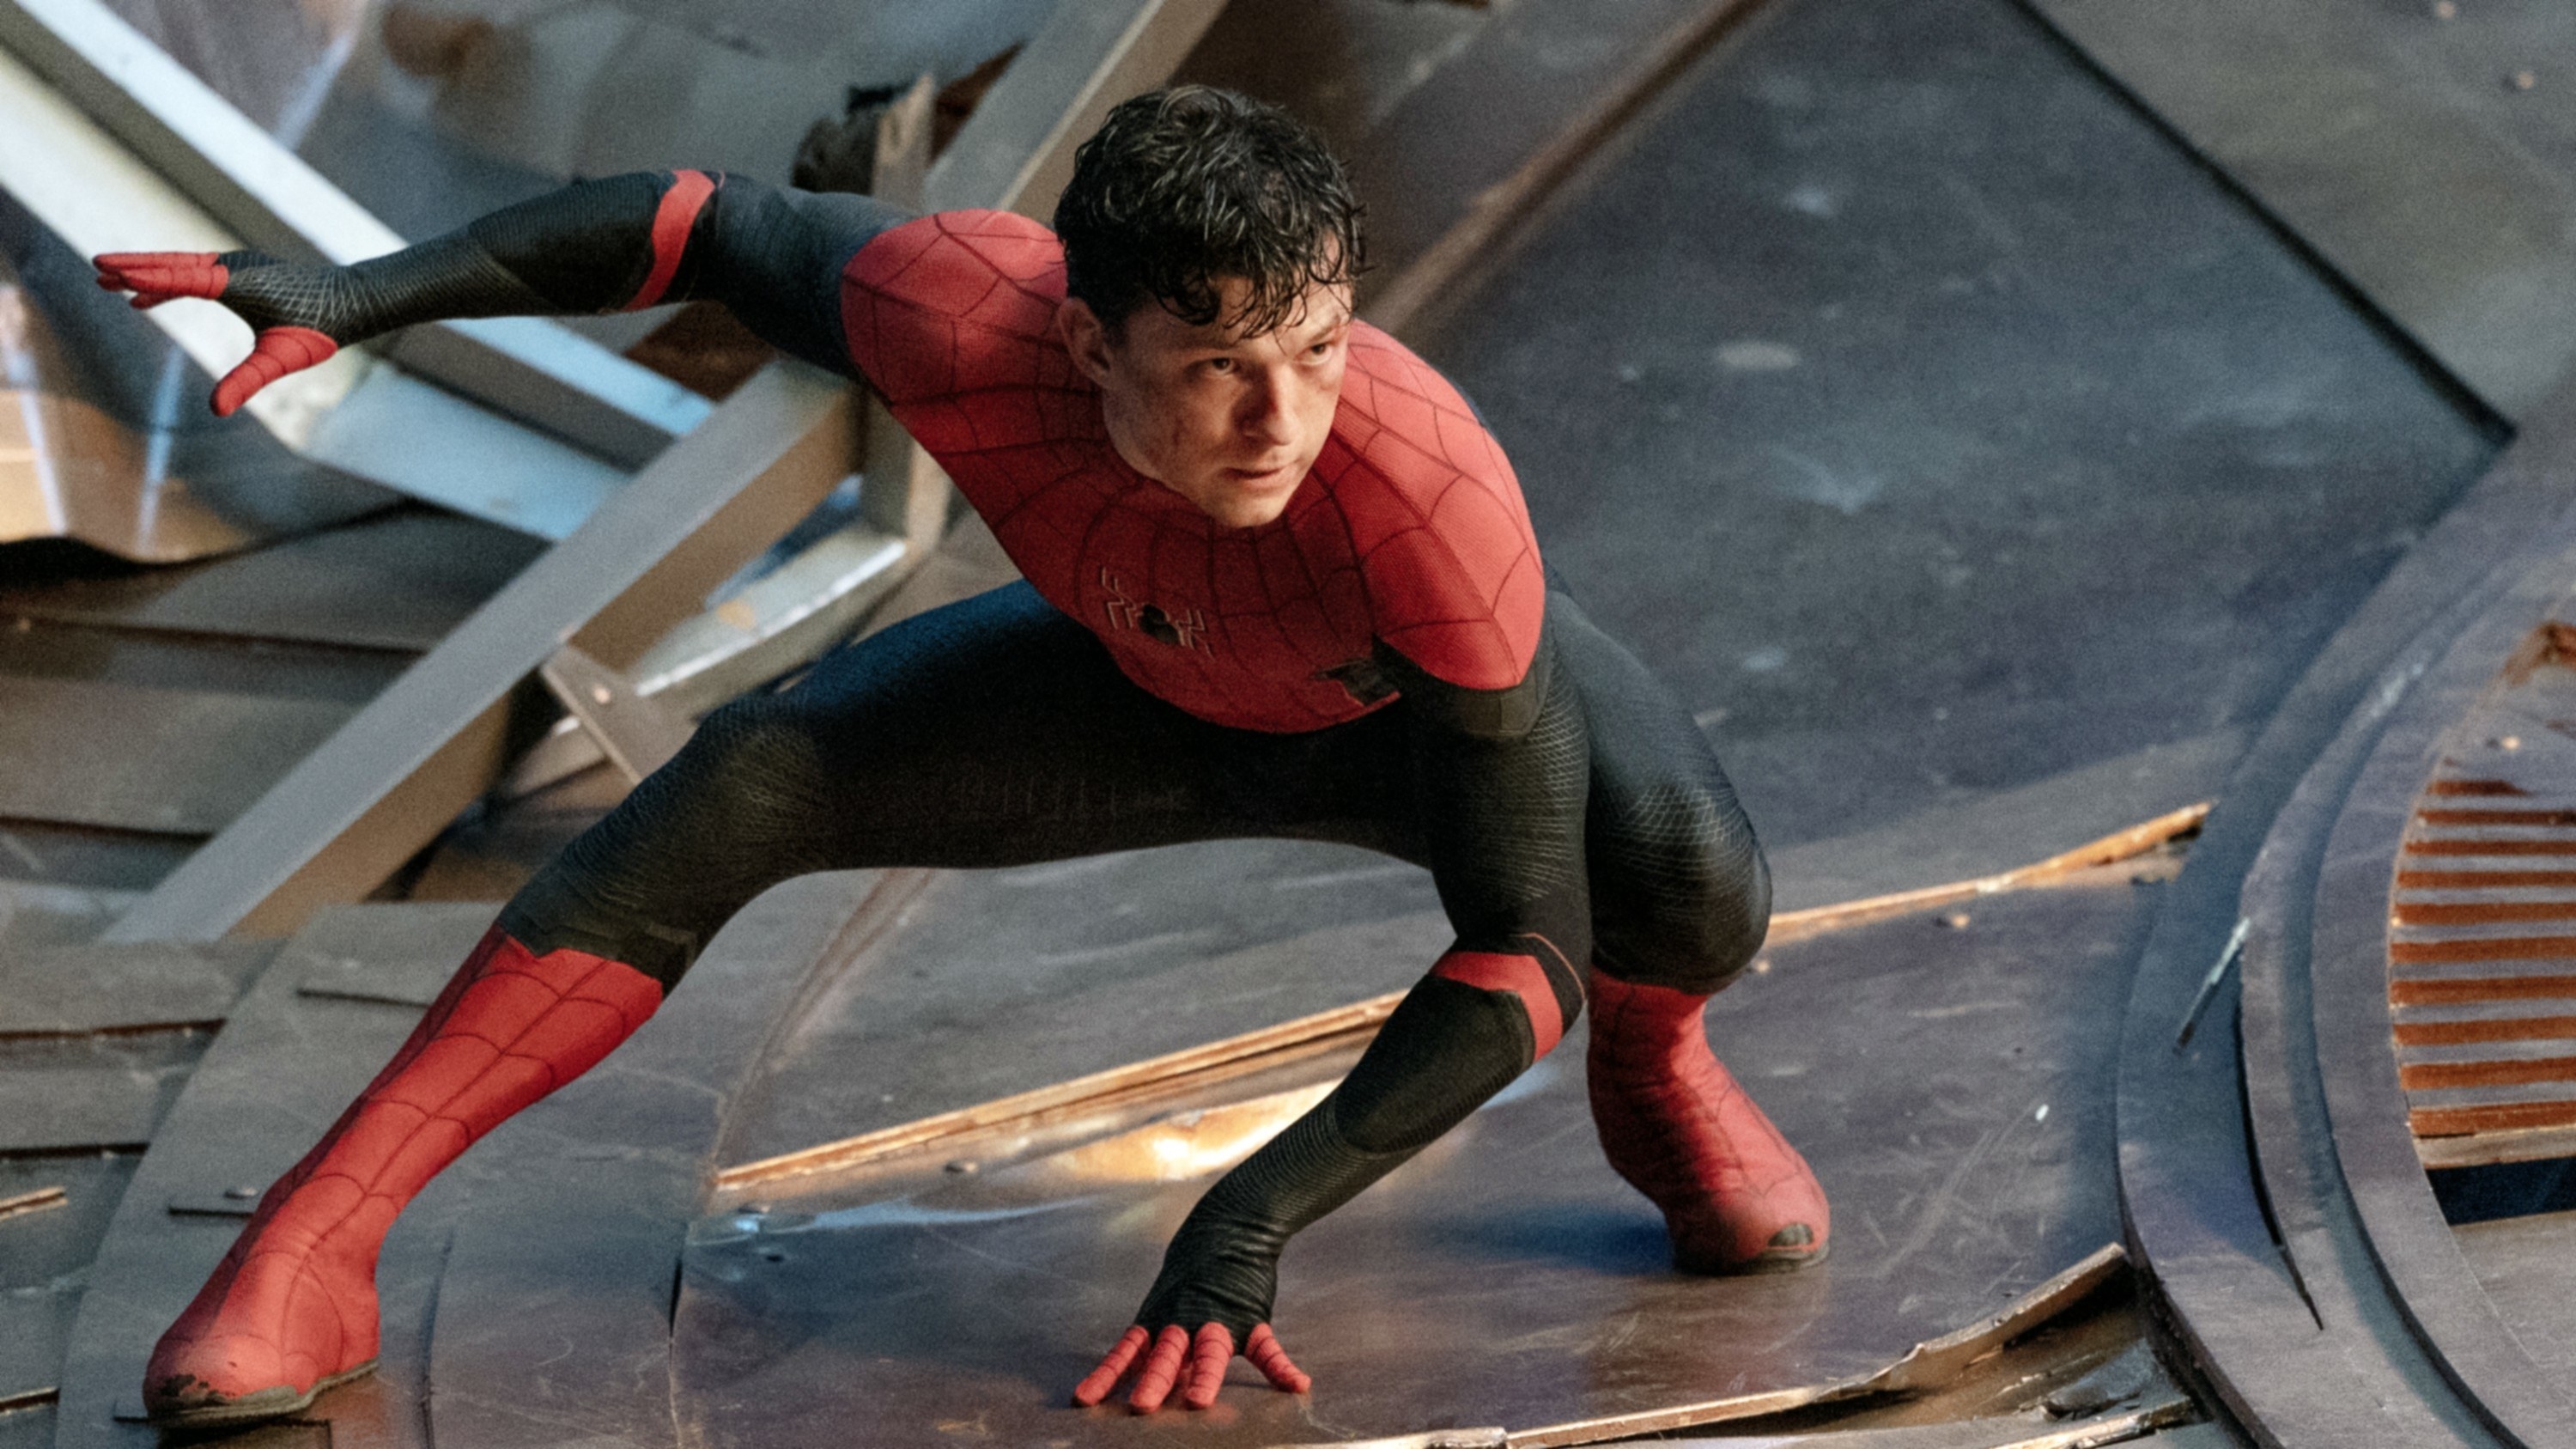 Tom as Spider-Man